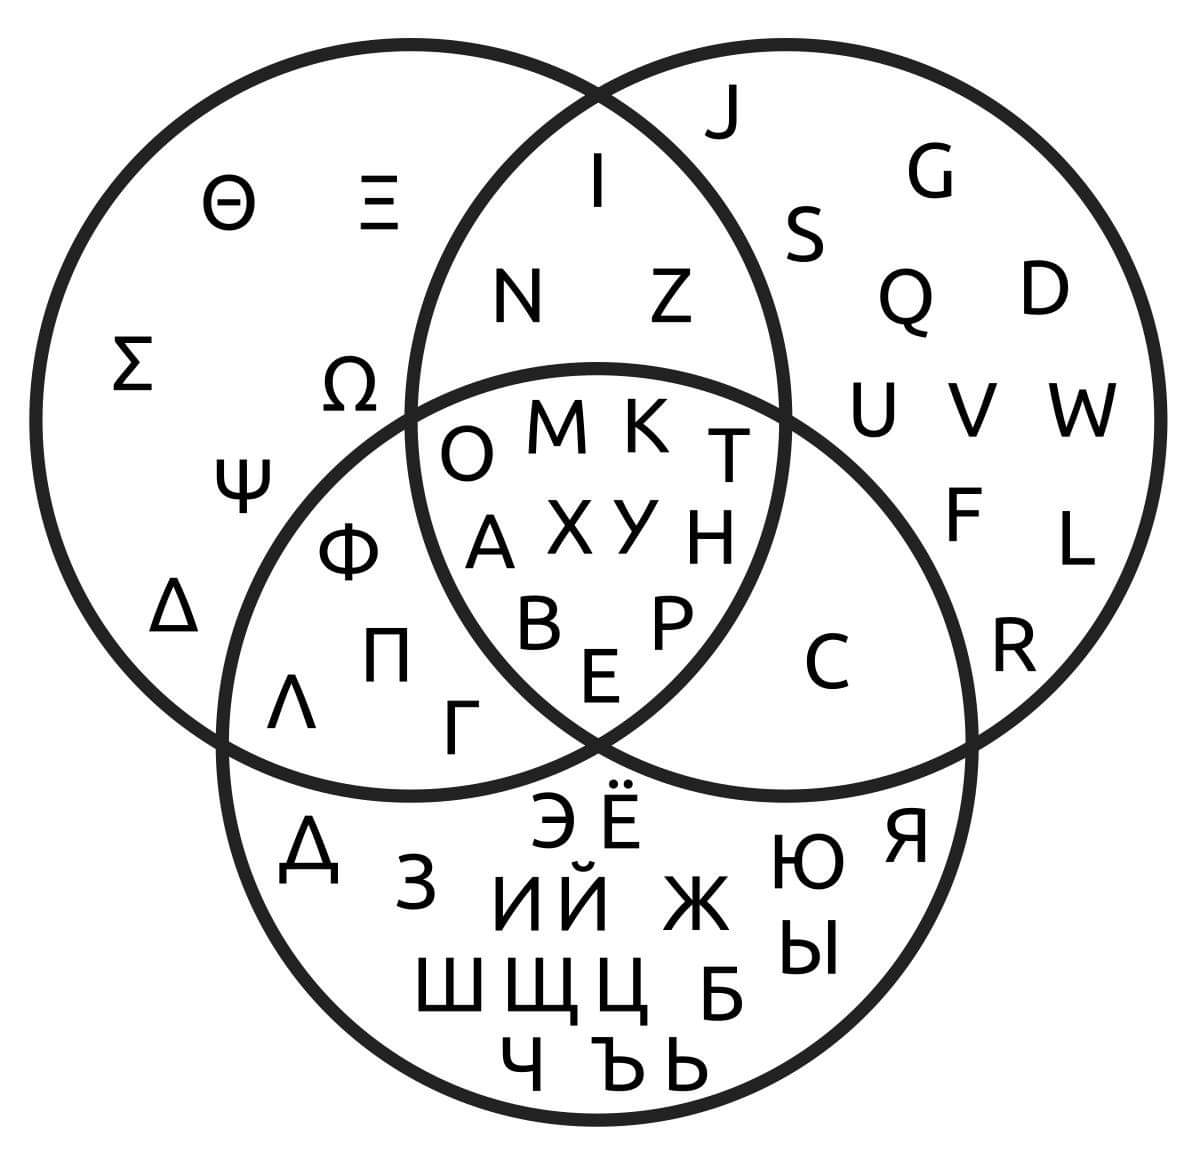 alphabets_intersections.jpg